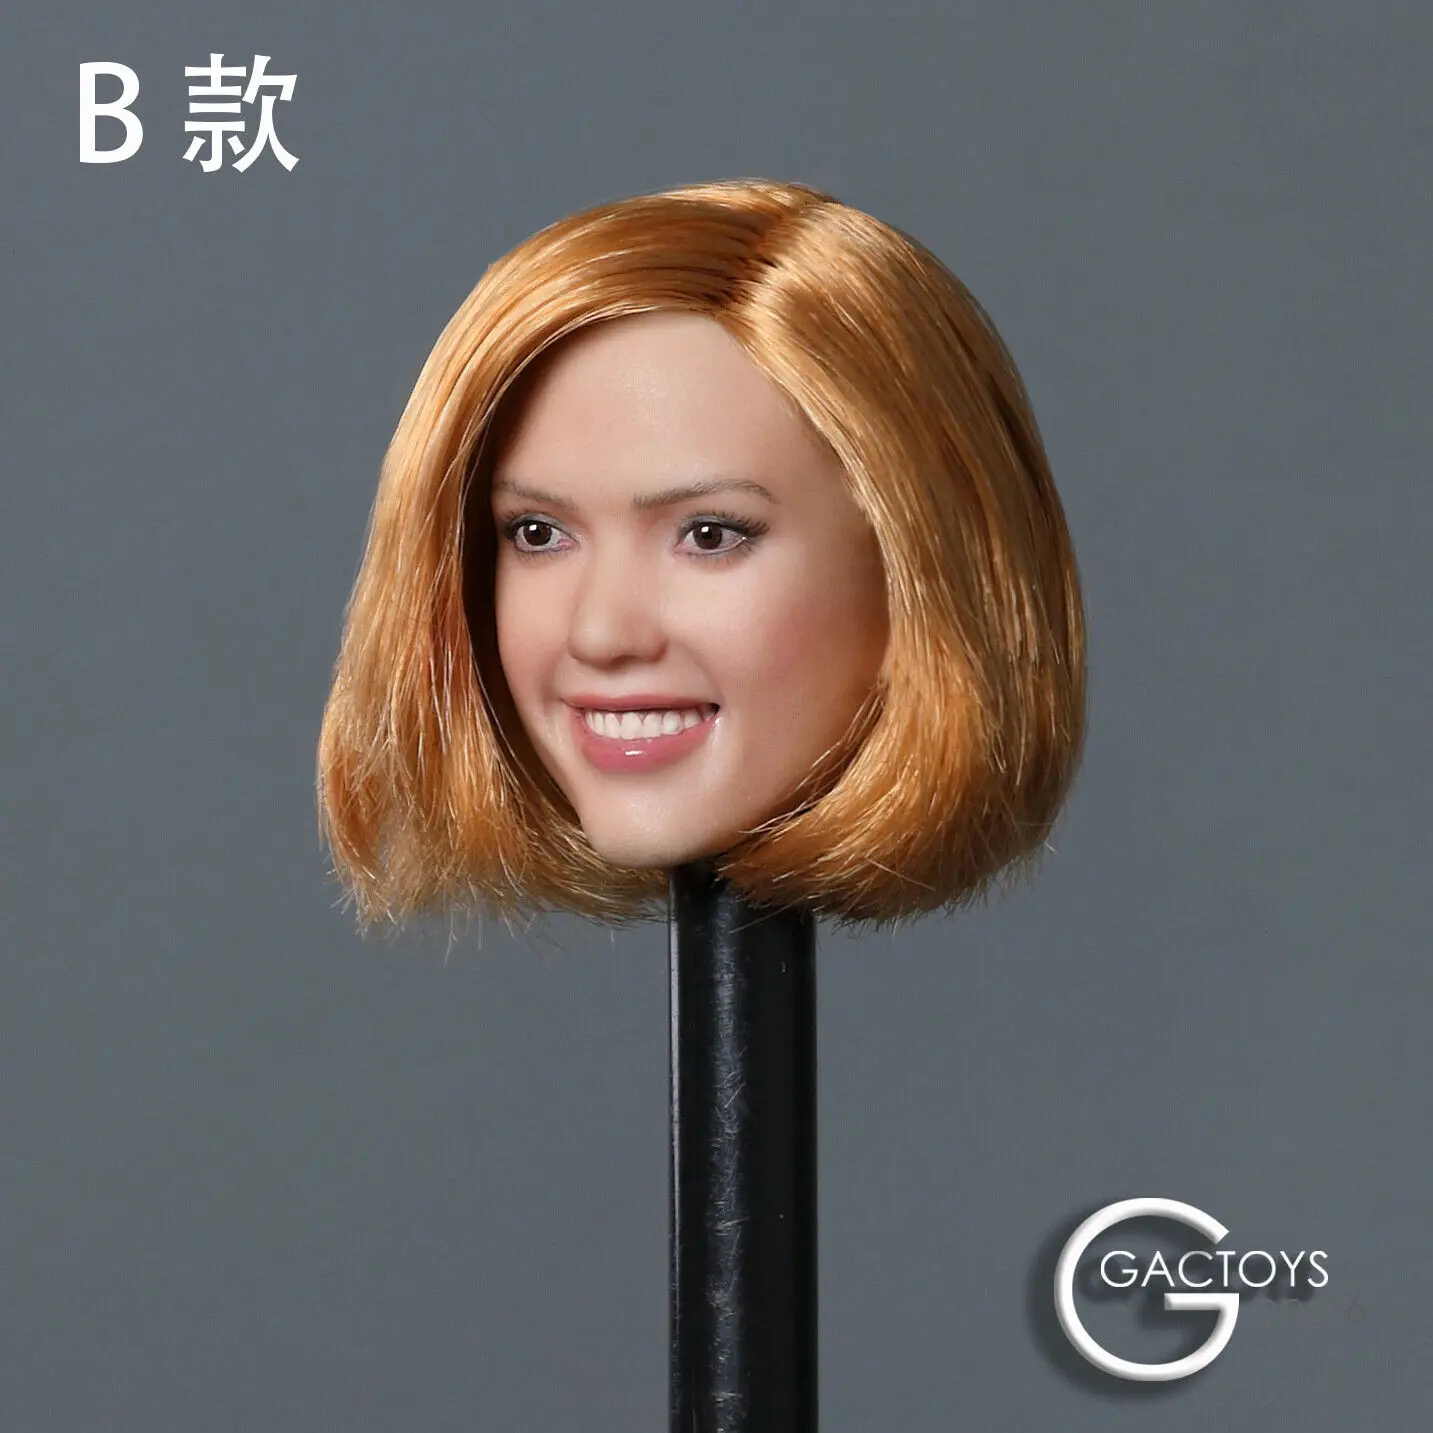 1/6 Female Long Blond Curls Head Sculpt Model SDH005B Fit 12" Figure In stock Items images - 6